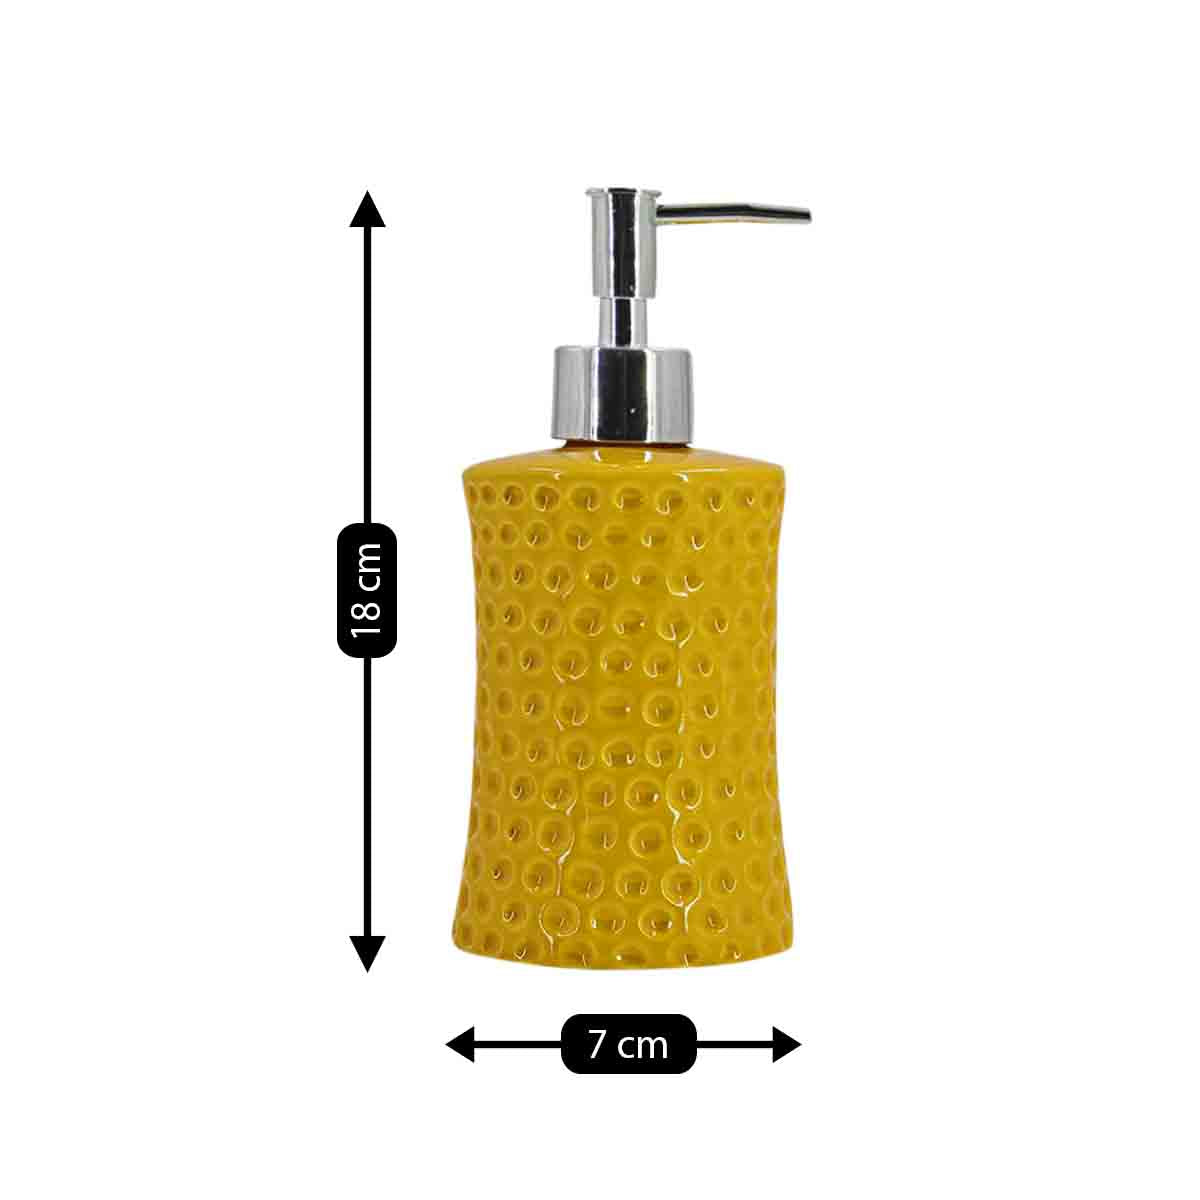 Ceramic Soap Dispenser Pump for Bathroom for Bath Gel, Lotion, Shampoo (8039)